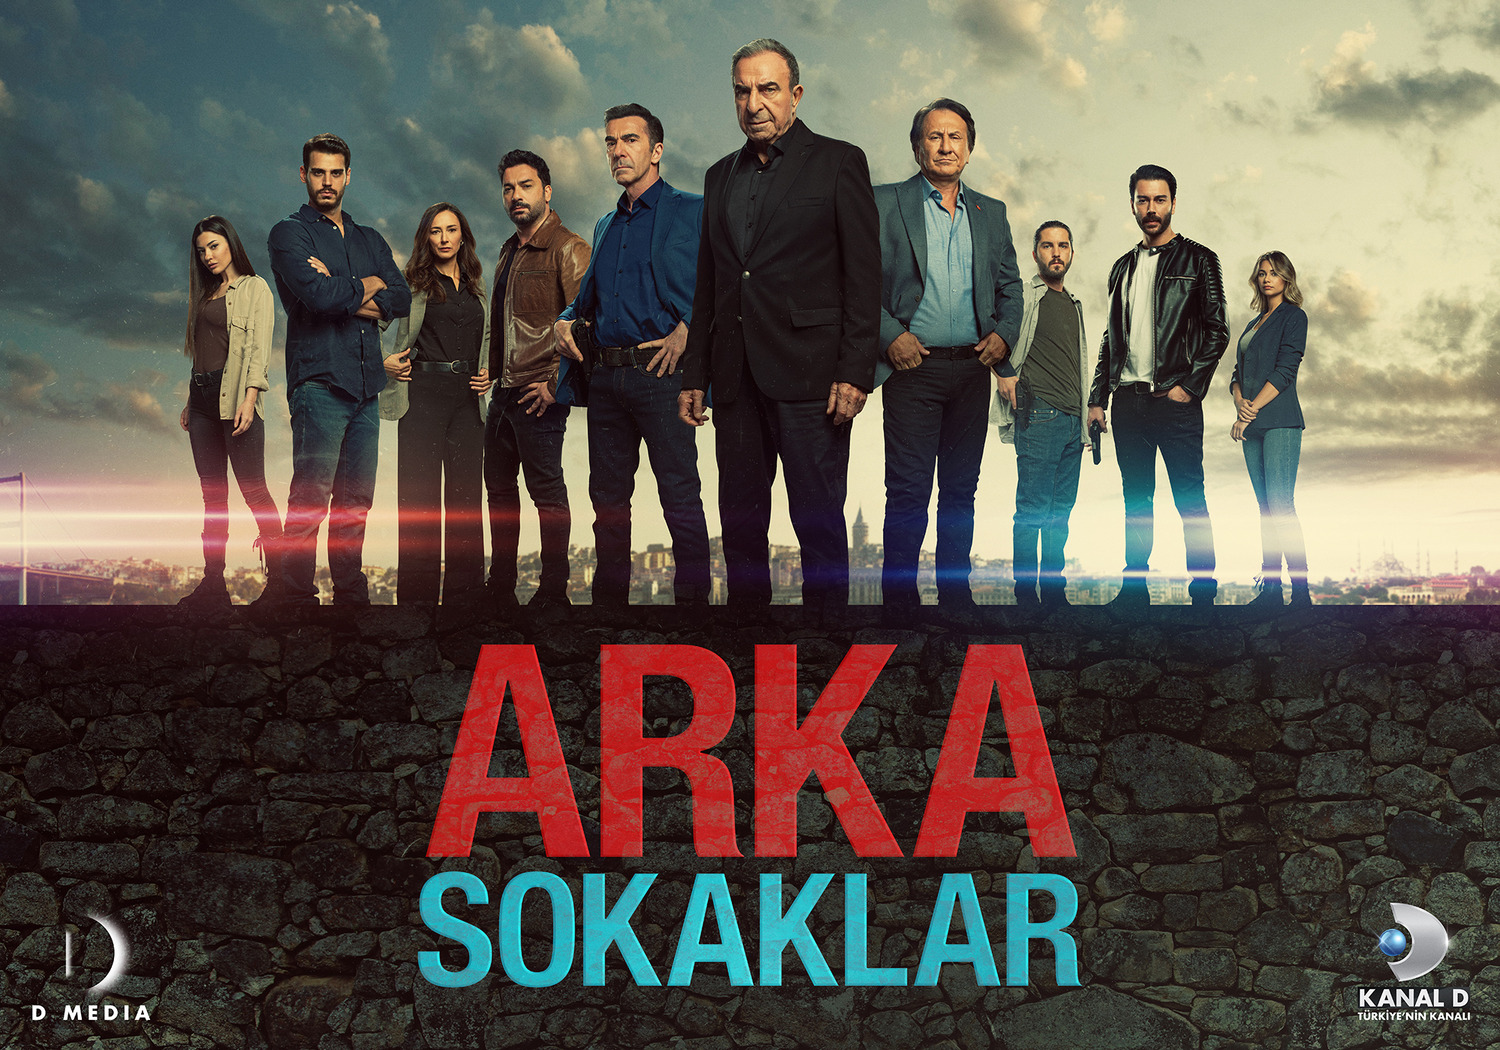 Extra Large TV Poster Image for Arka sokaklar (#11 of 11)